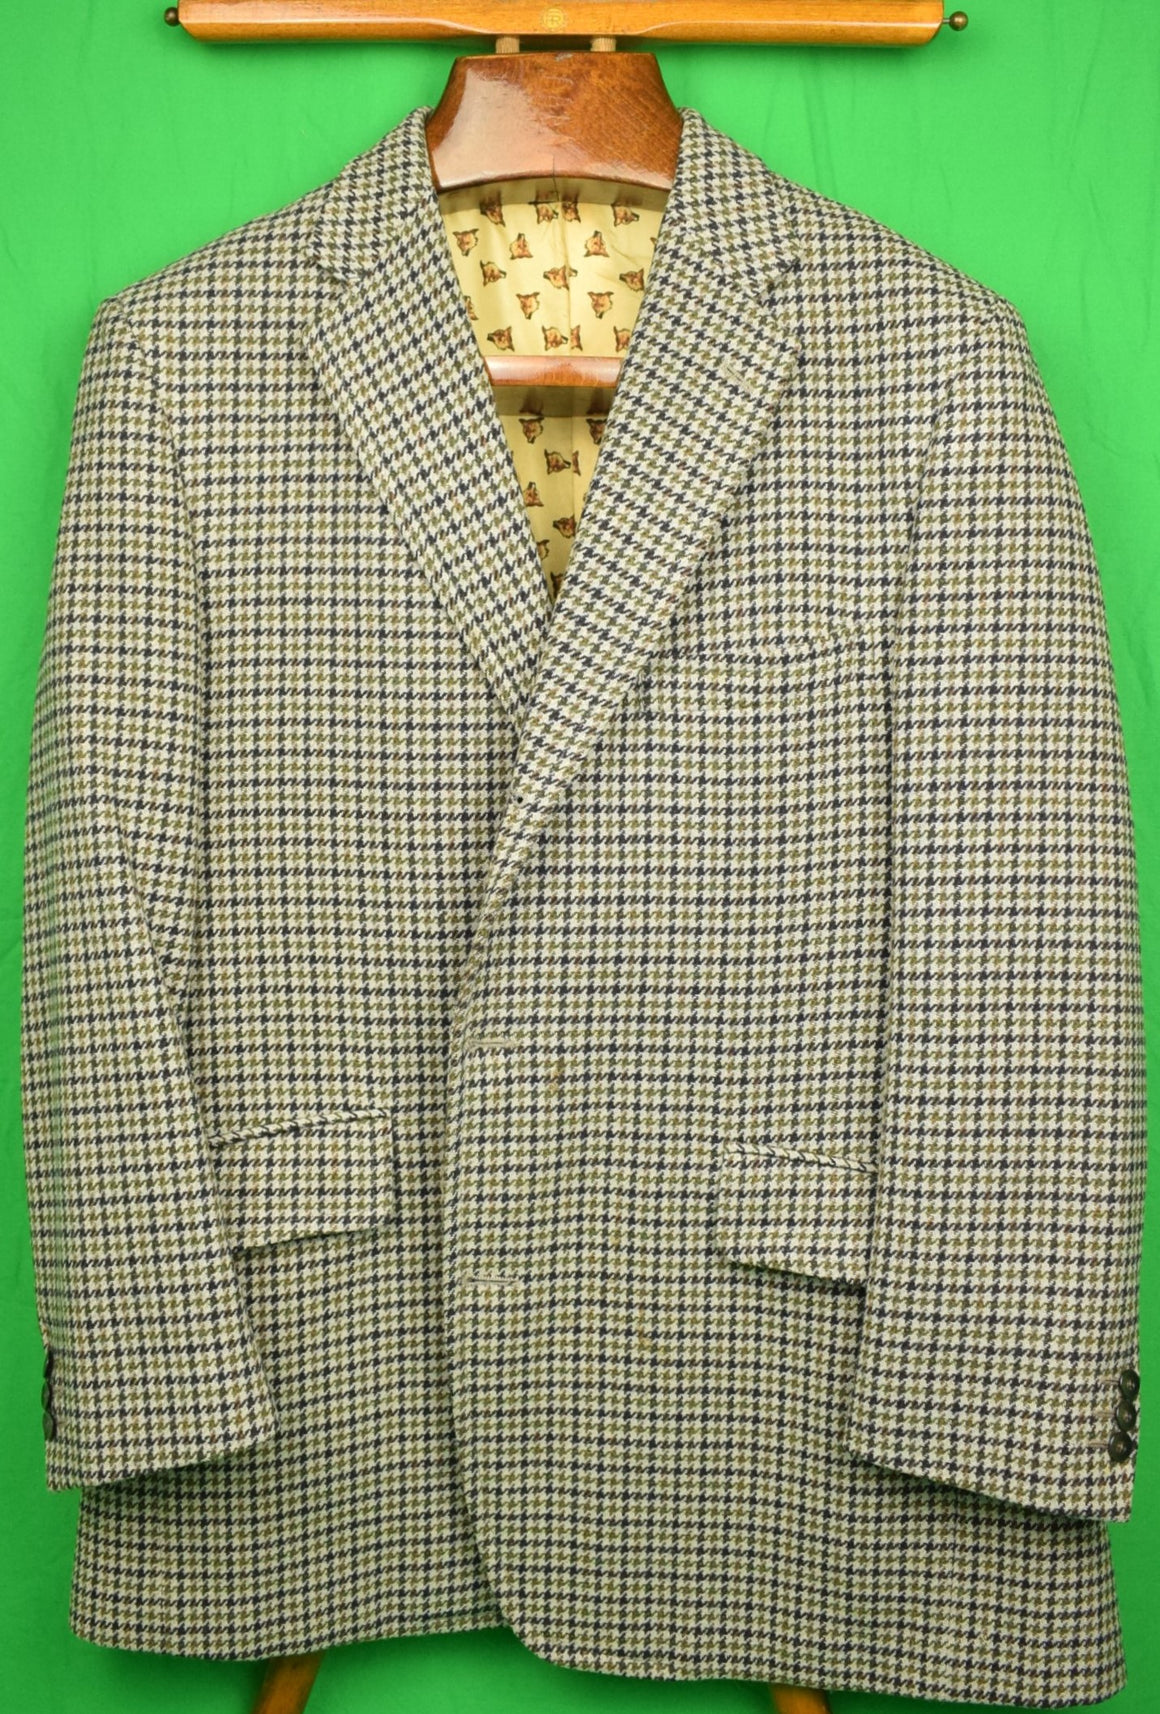 Chipp Olive Houndstooth Tweed c1987 Sport Jacket w/ Fox-Head Silk Lining Sz 41R